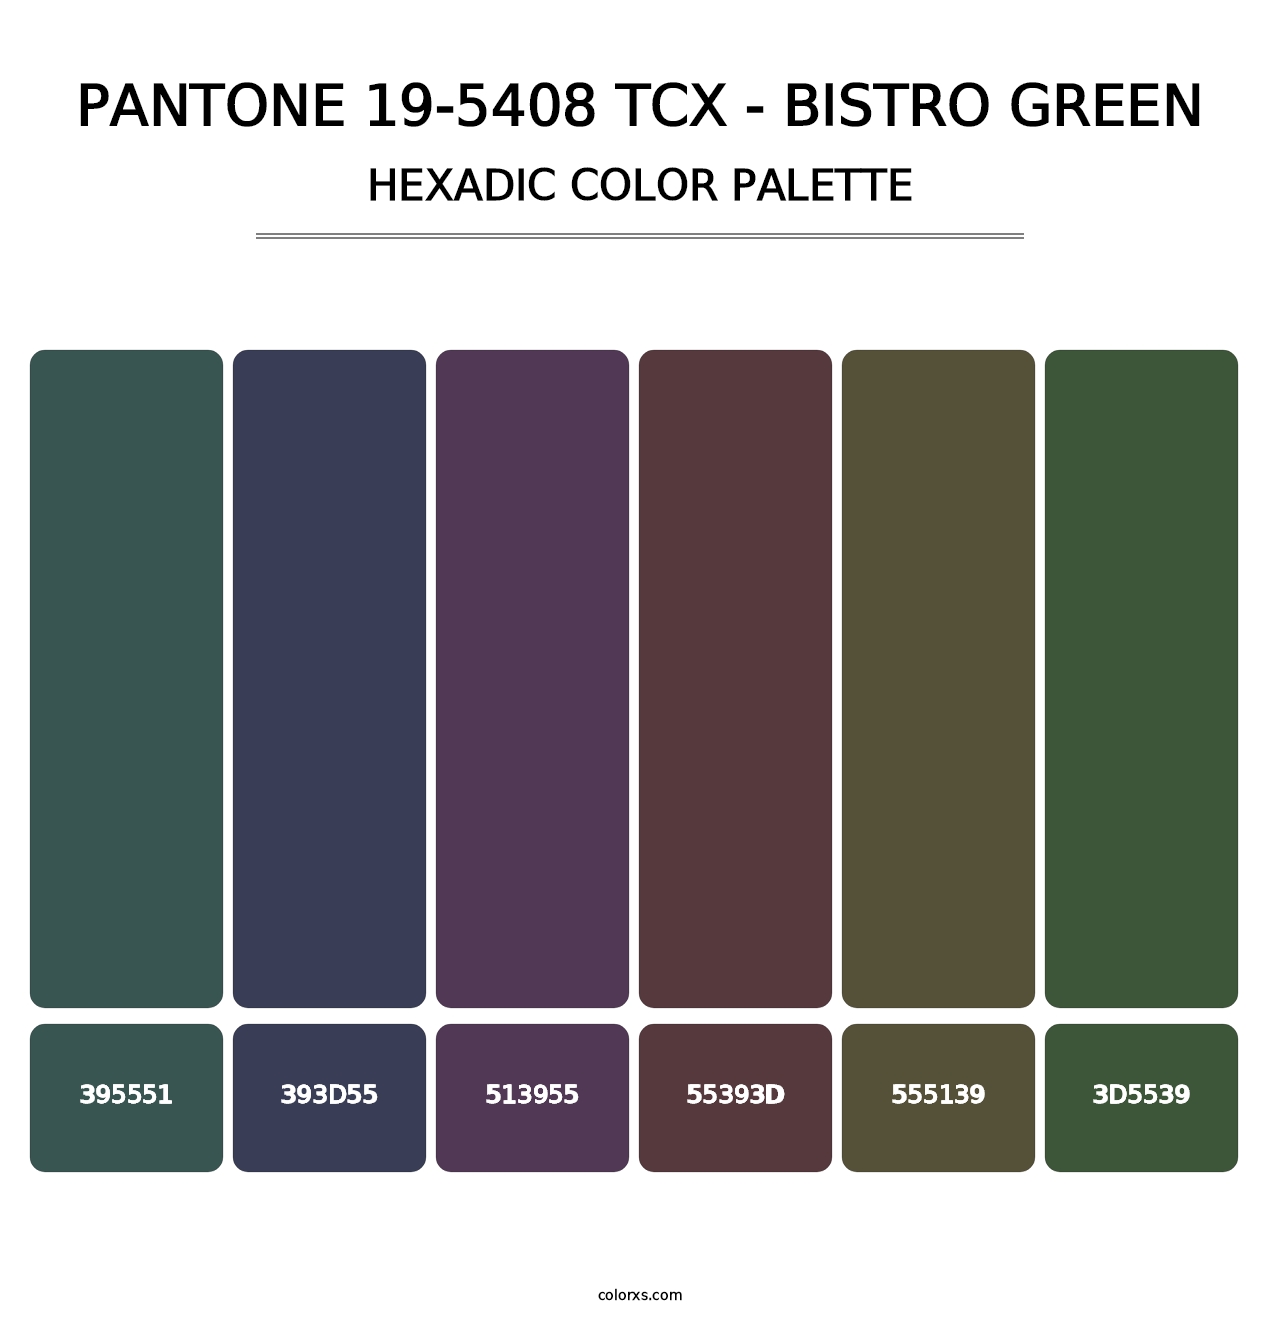 PANTONE 19-5408 TCX - Bistro Green - Hexadic Color Palette